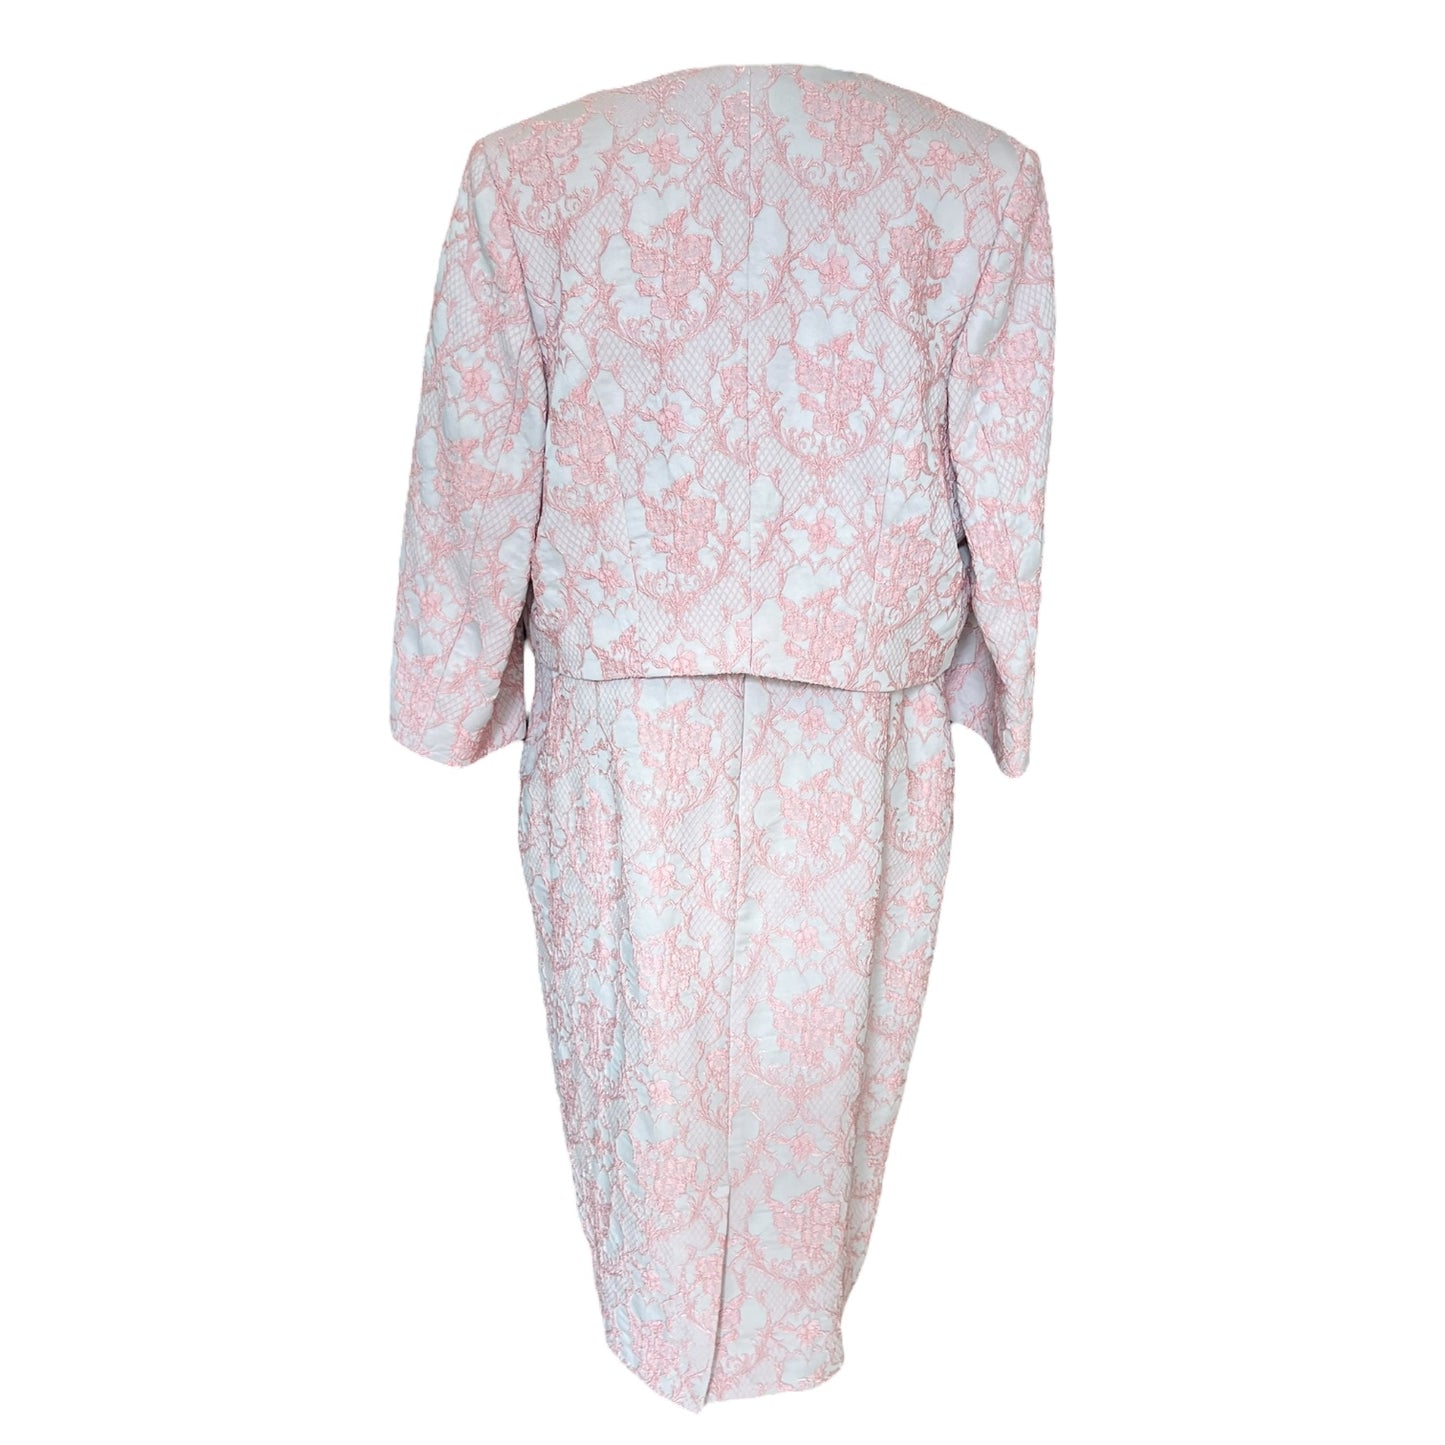 Lizabella Pink and Lilac Jacket and Dress - 16